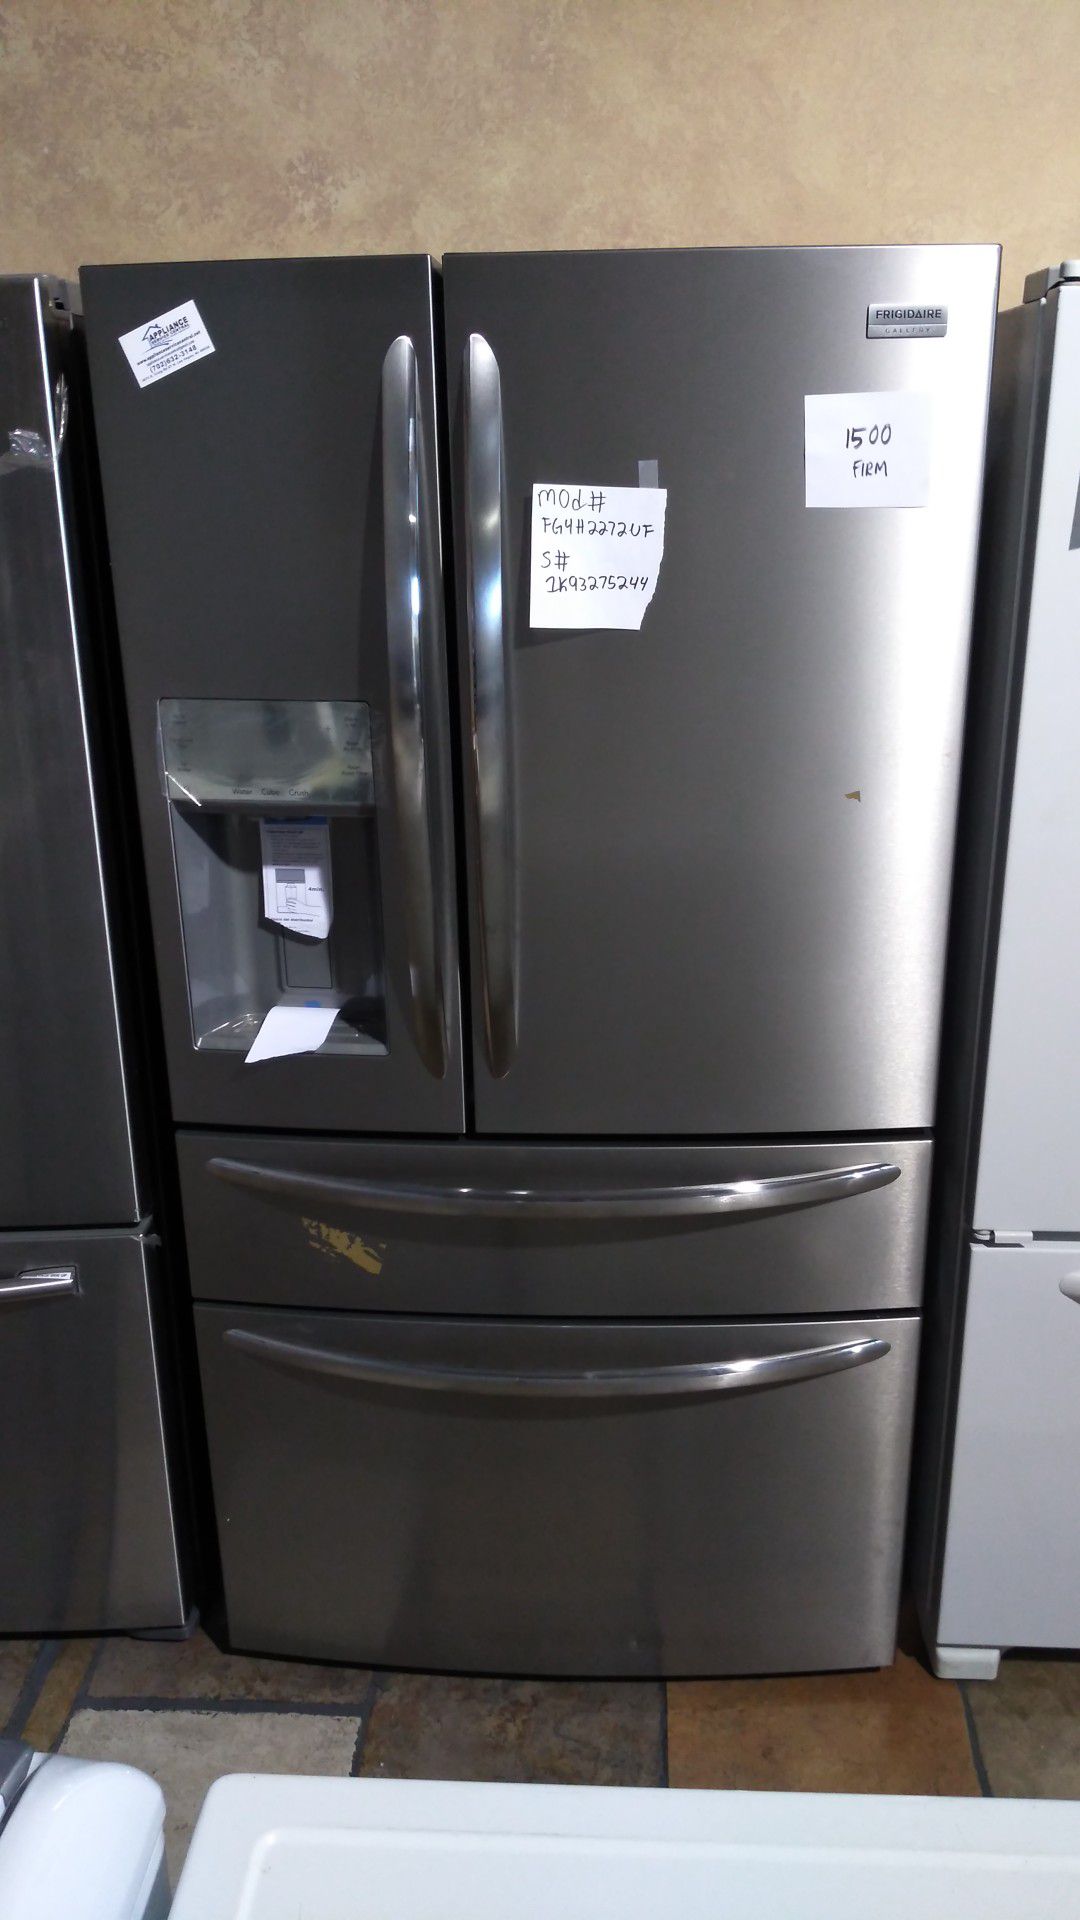 New S&D 4 door Refrigerator (Frigidaire) black stainless